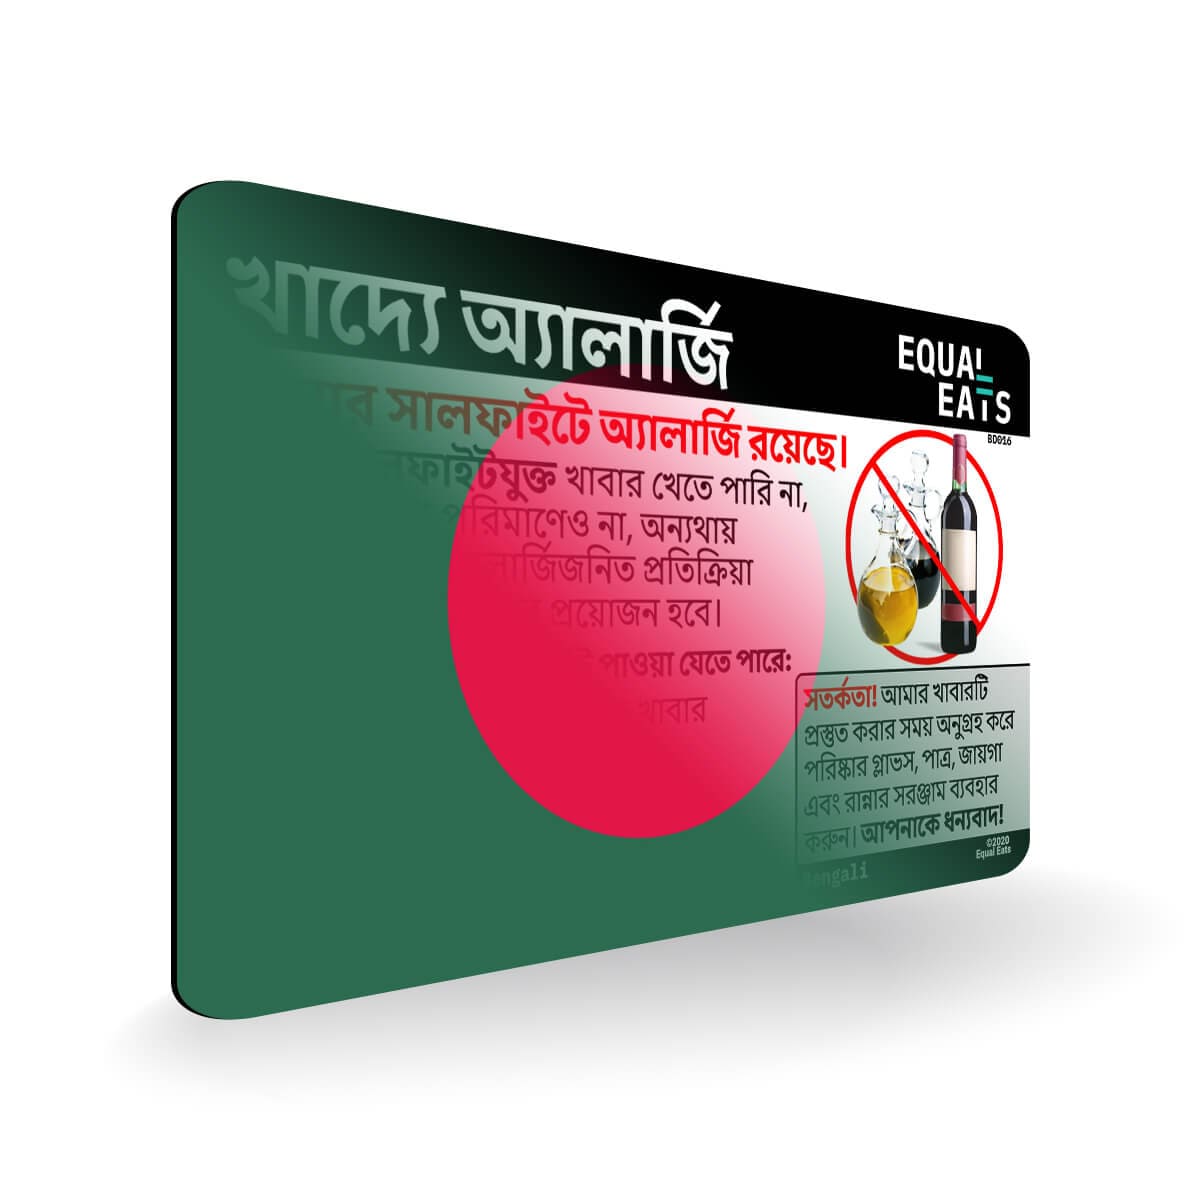 Sulfite Allergy in Bengali. Sulfite Allergy Card for Bangladesh